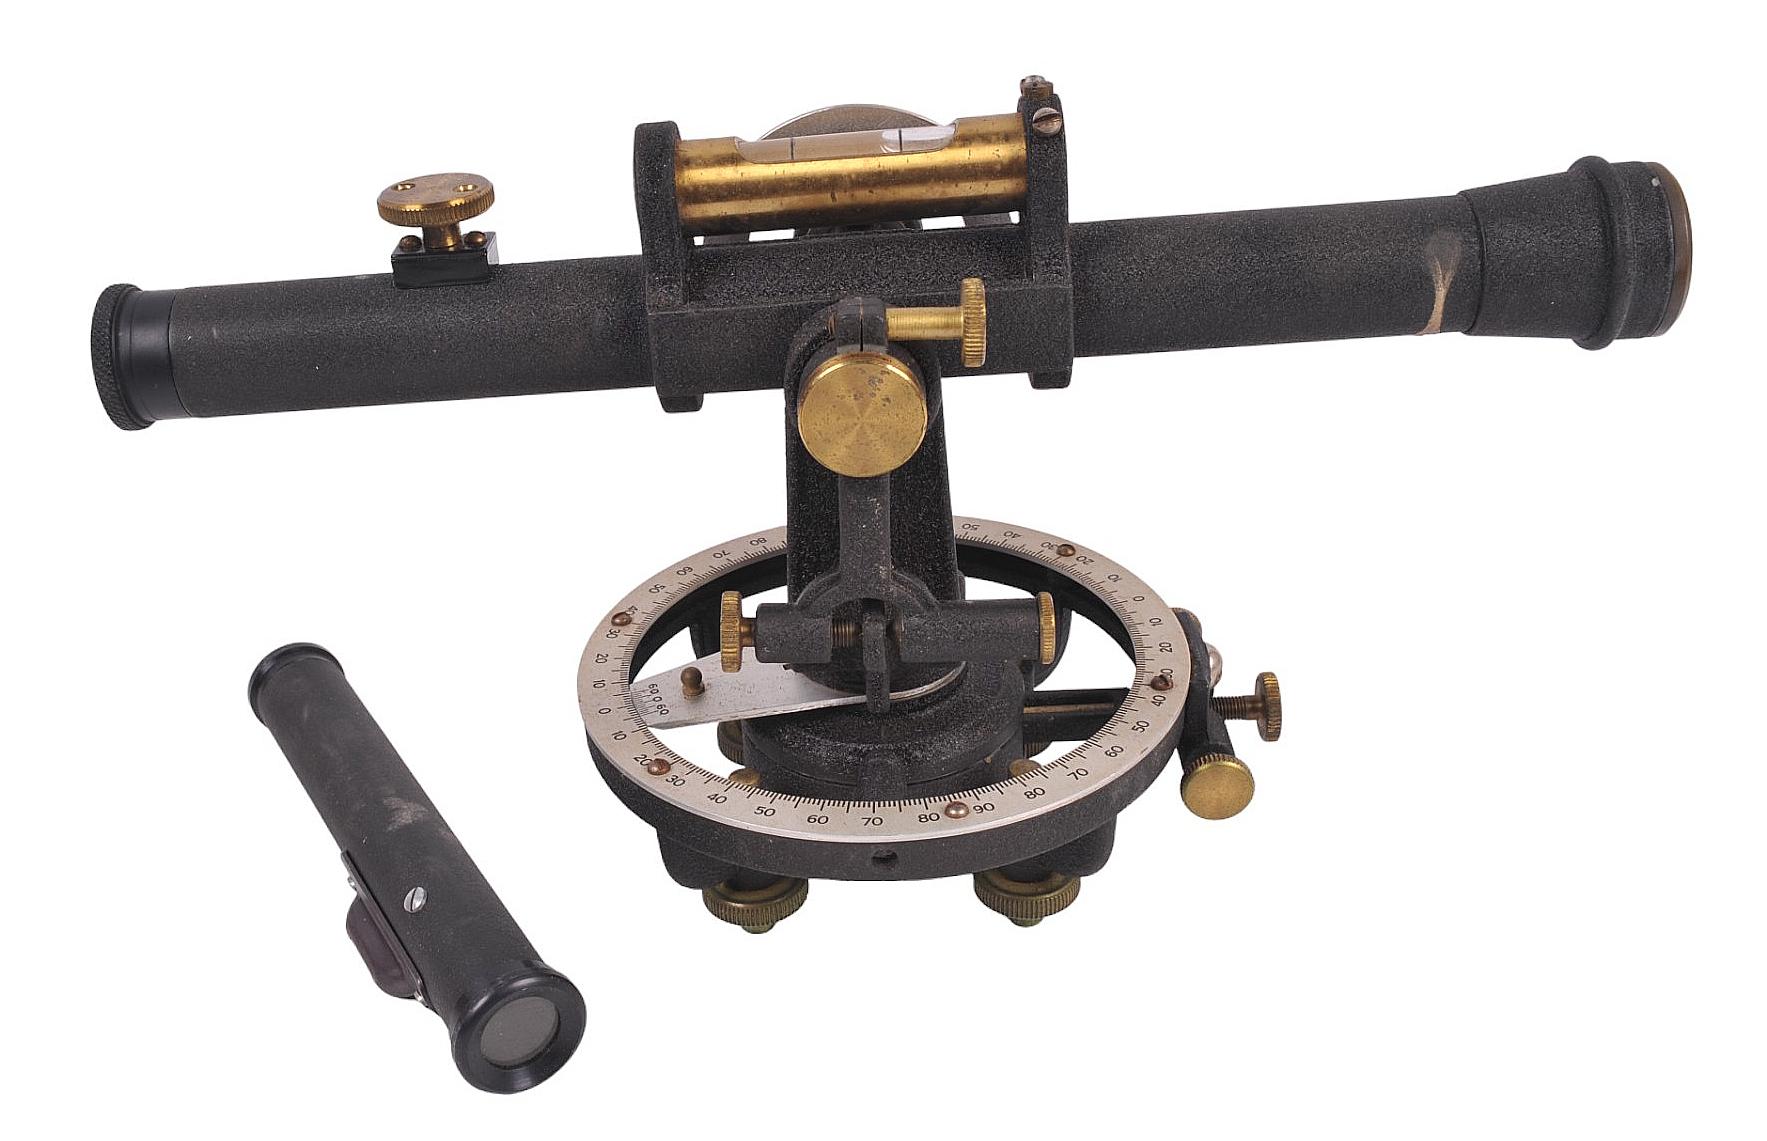 Antique US Surveying Transit, Plum-Bob, Accessories and Case (RSO)